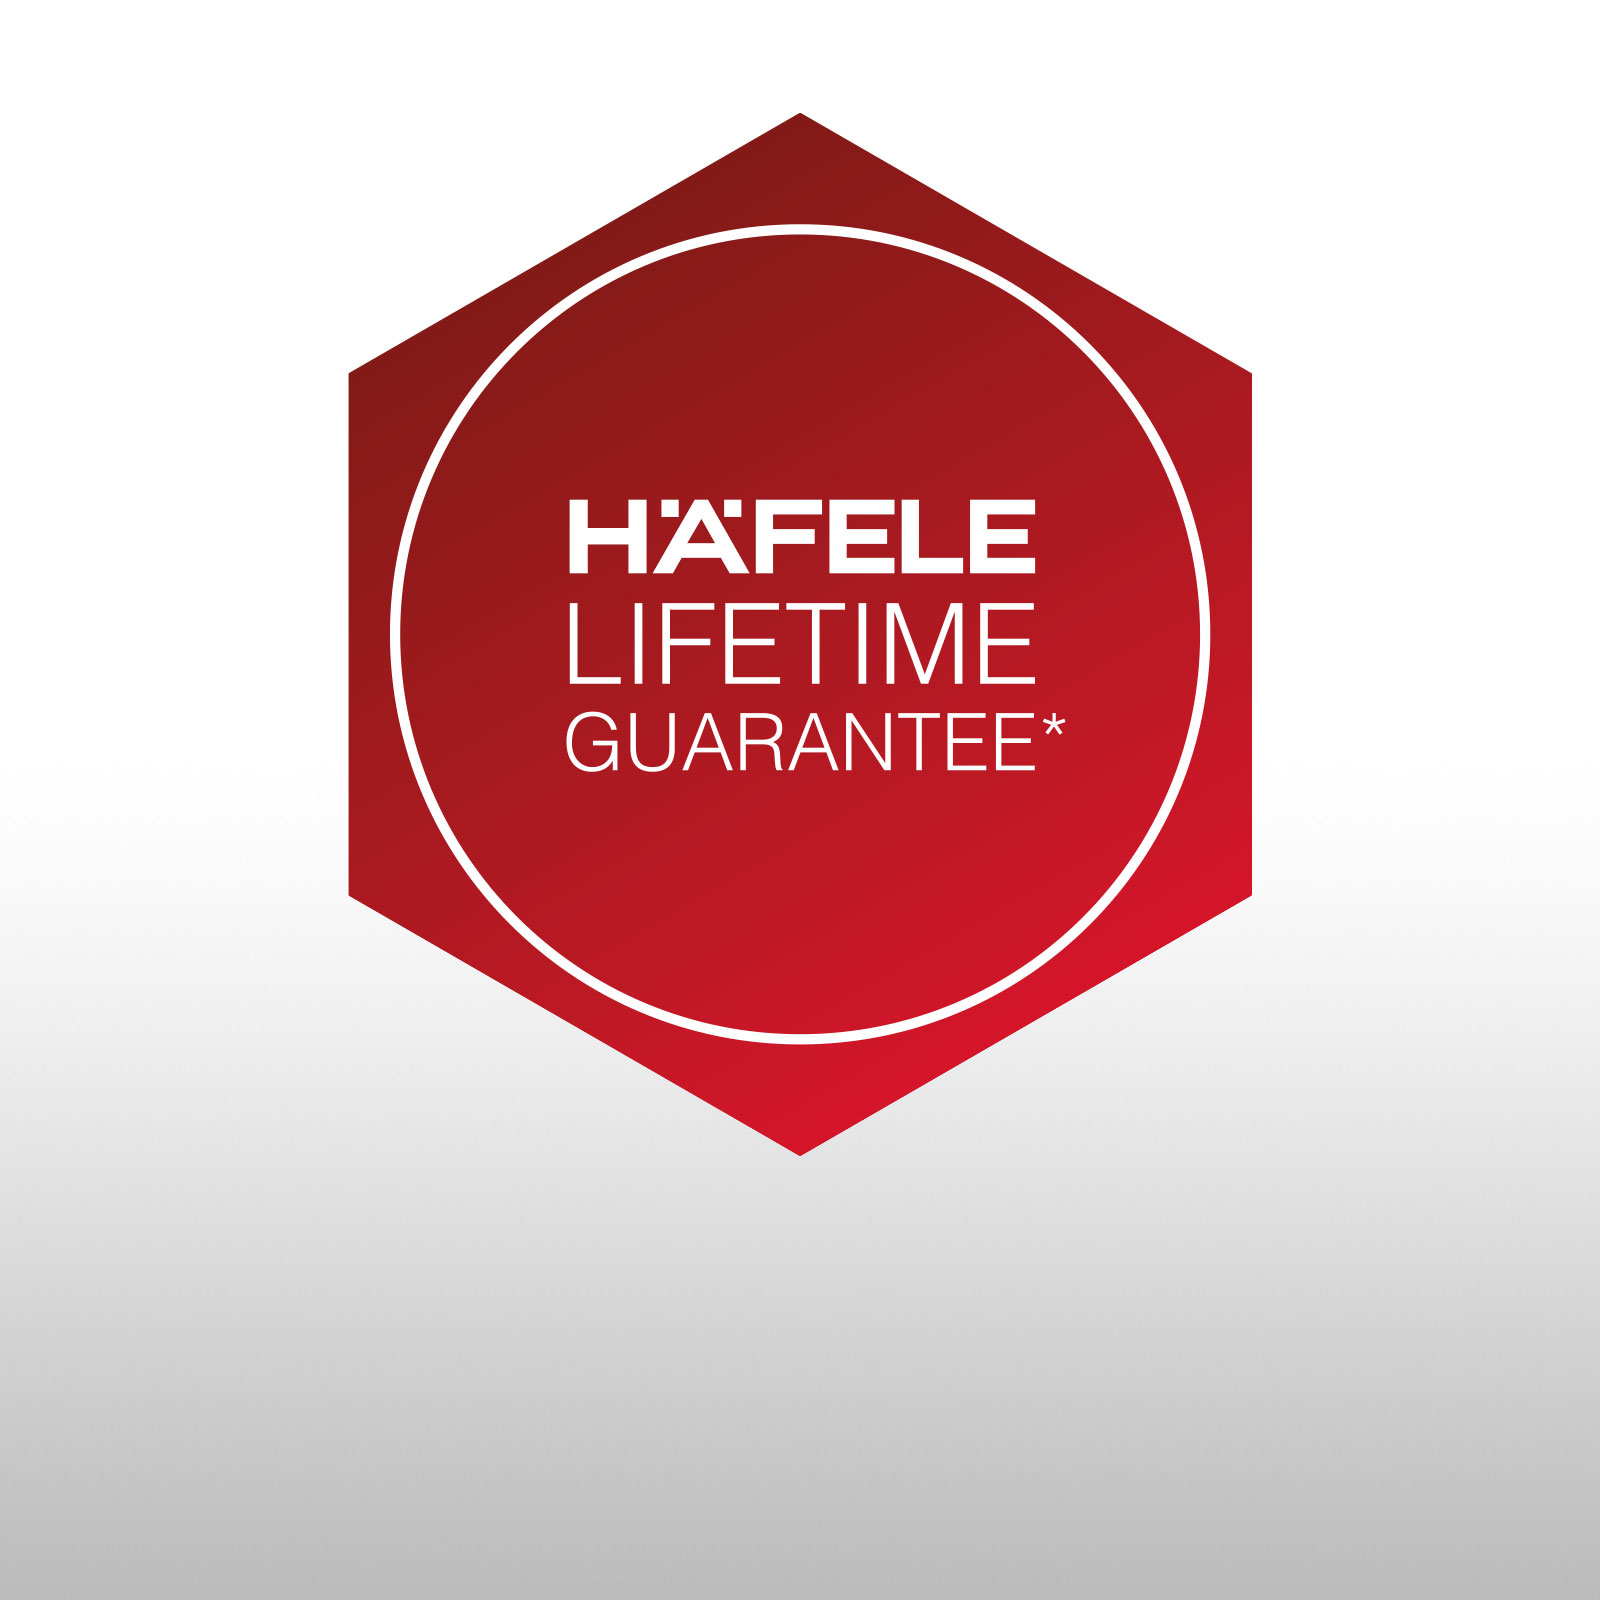 Hafele Lifetime Guarantee